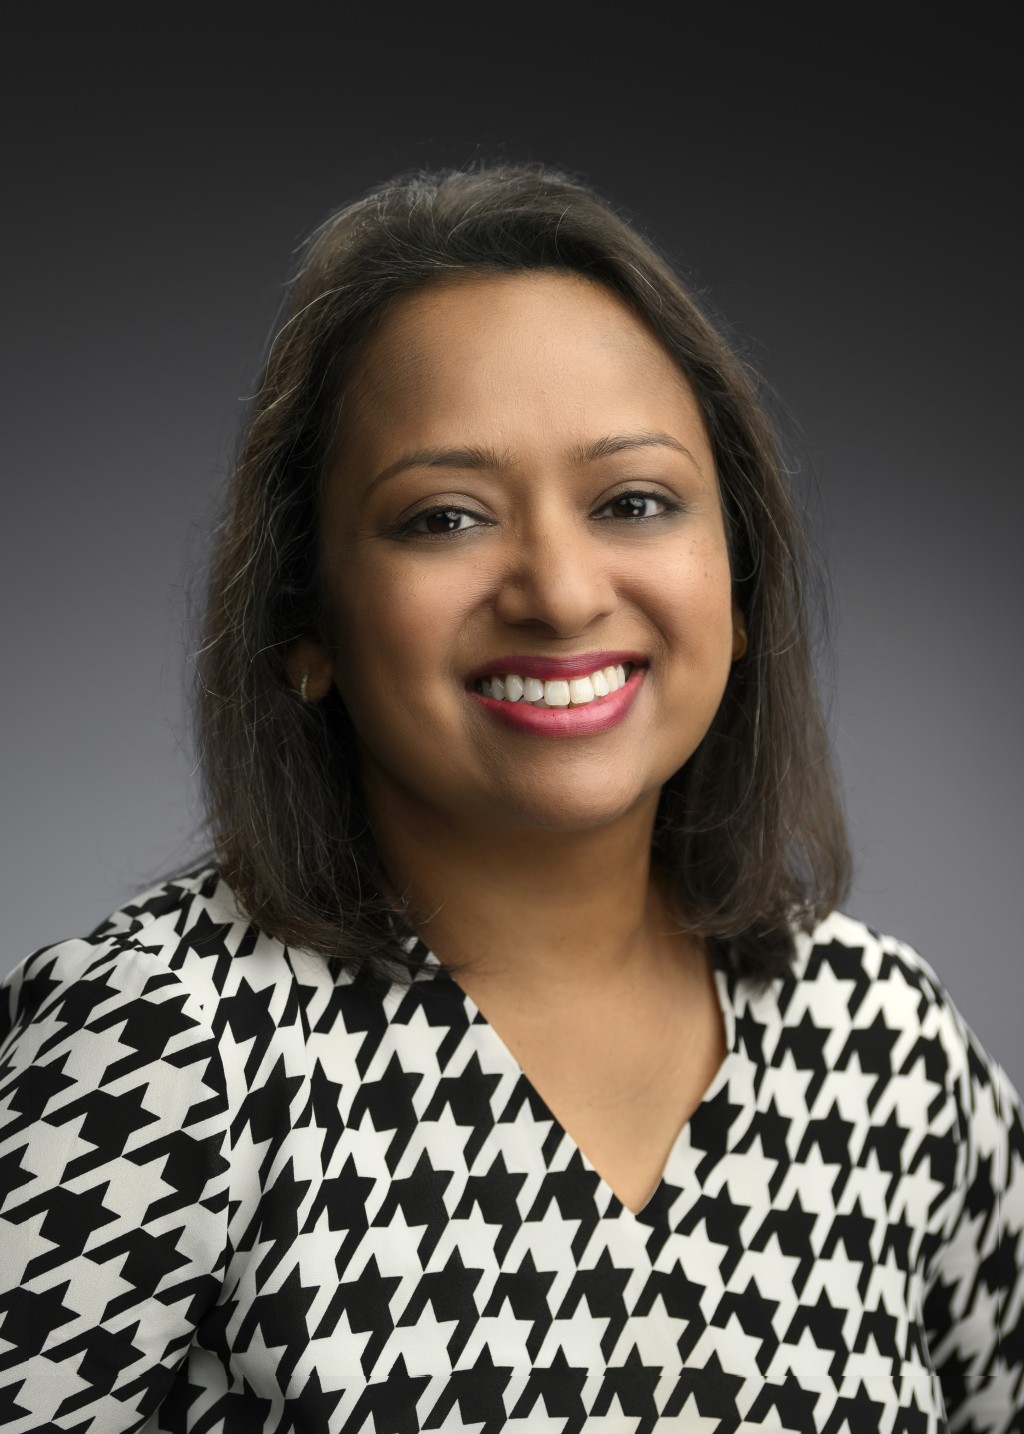 Kavita Gupta, MD